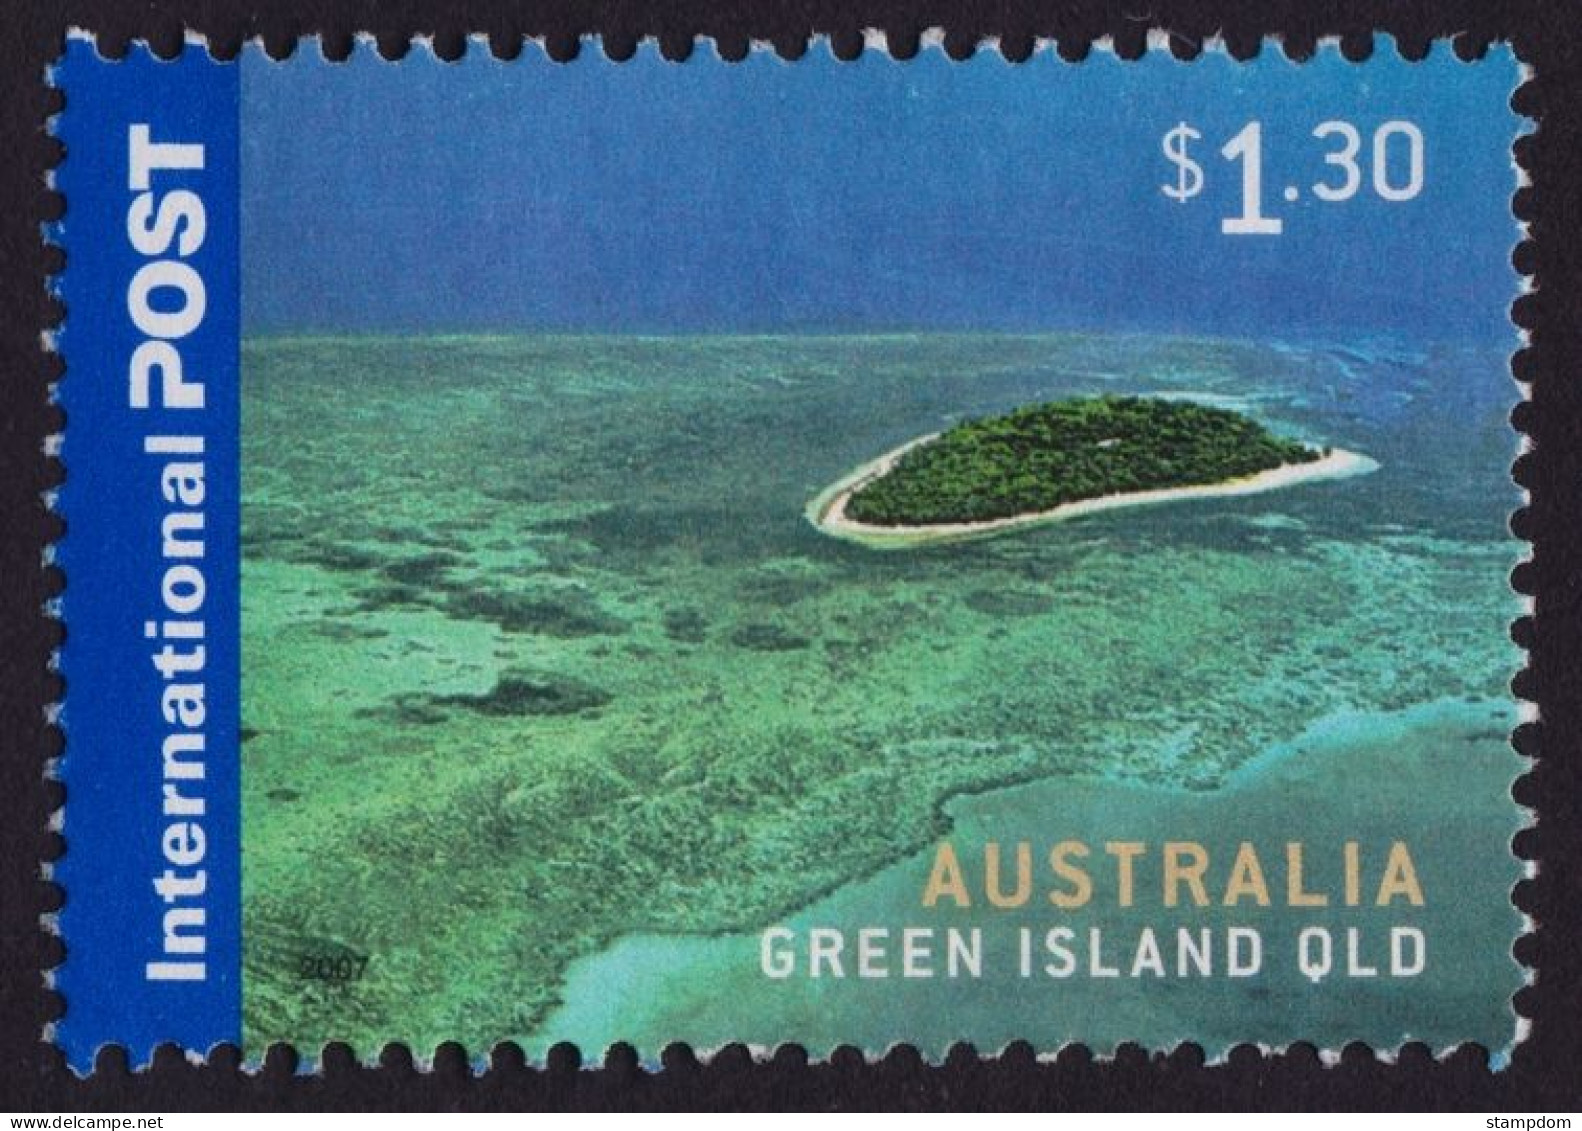 AUSTRALIA 2007 Islands $1.30 Green Island Sc#2629 USED @O425 - Gebruikt